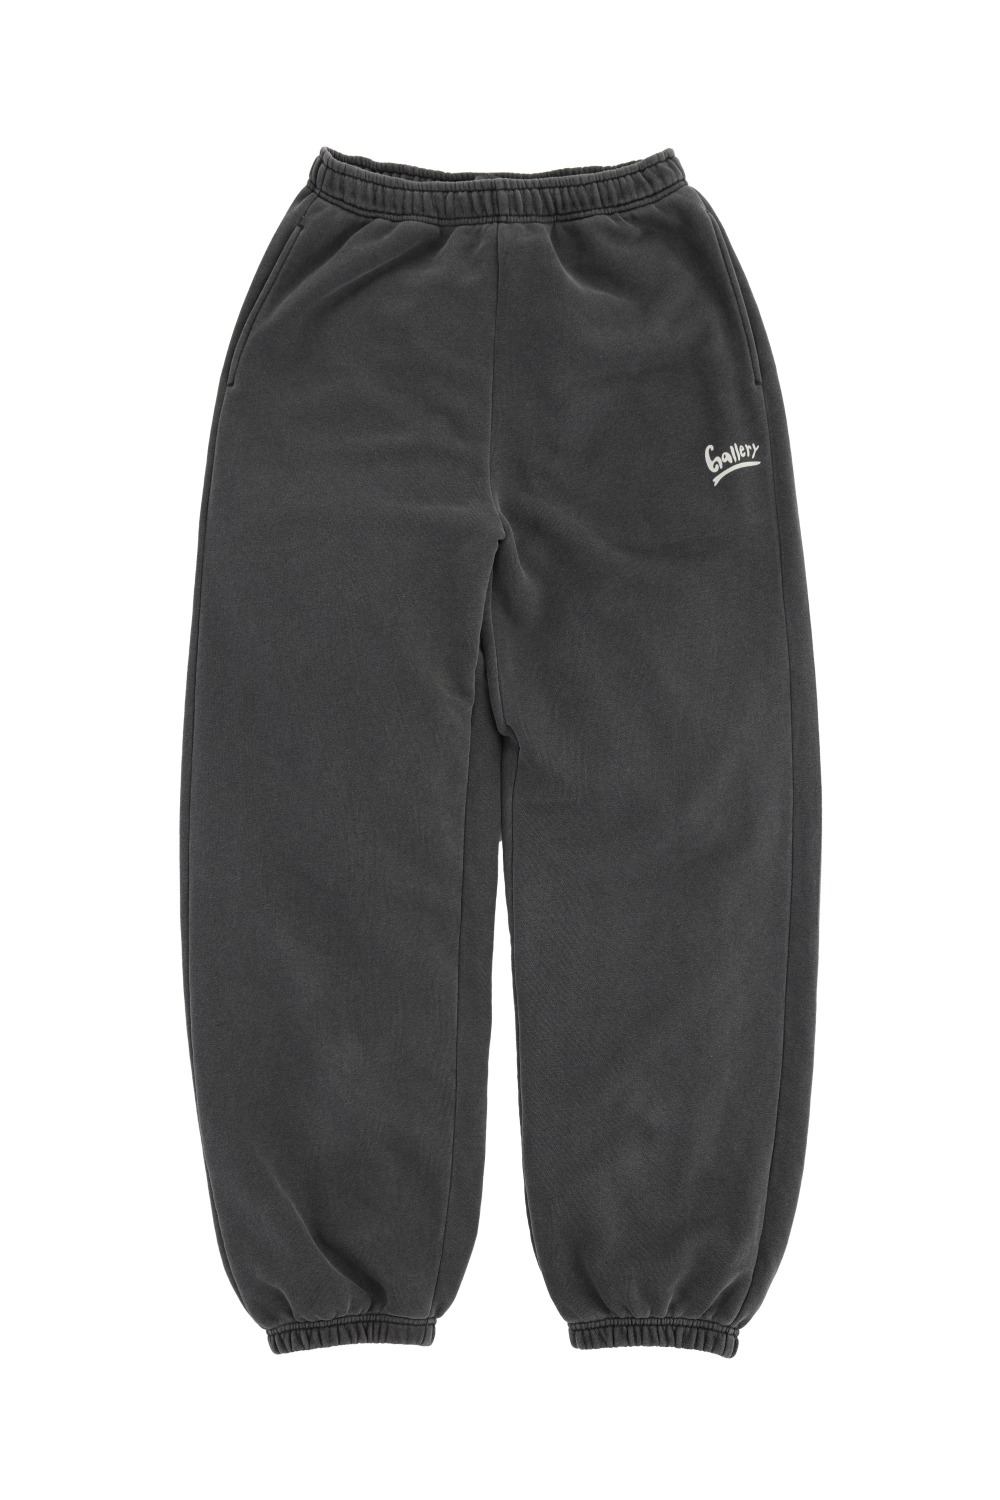 Gallery Wave Logo Jogger Sweat Pants  - Charcoal Grey